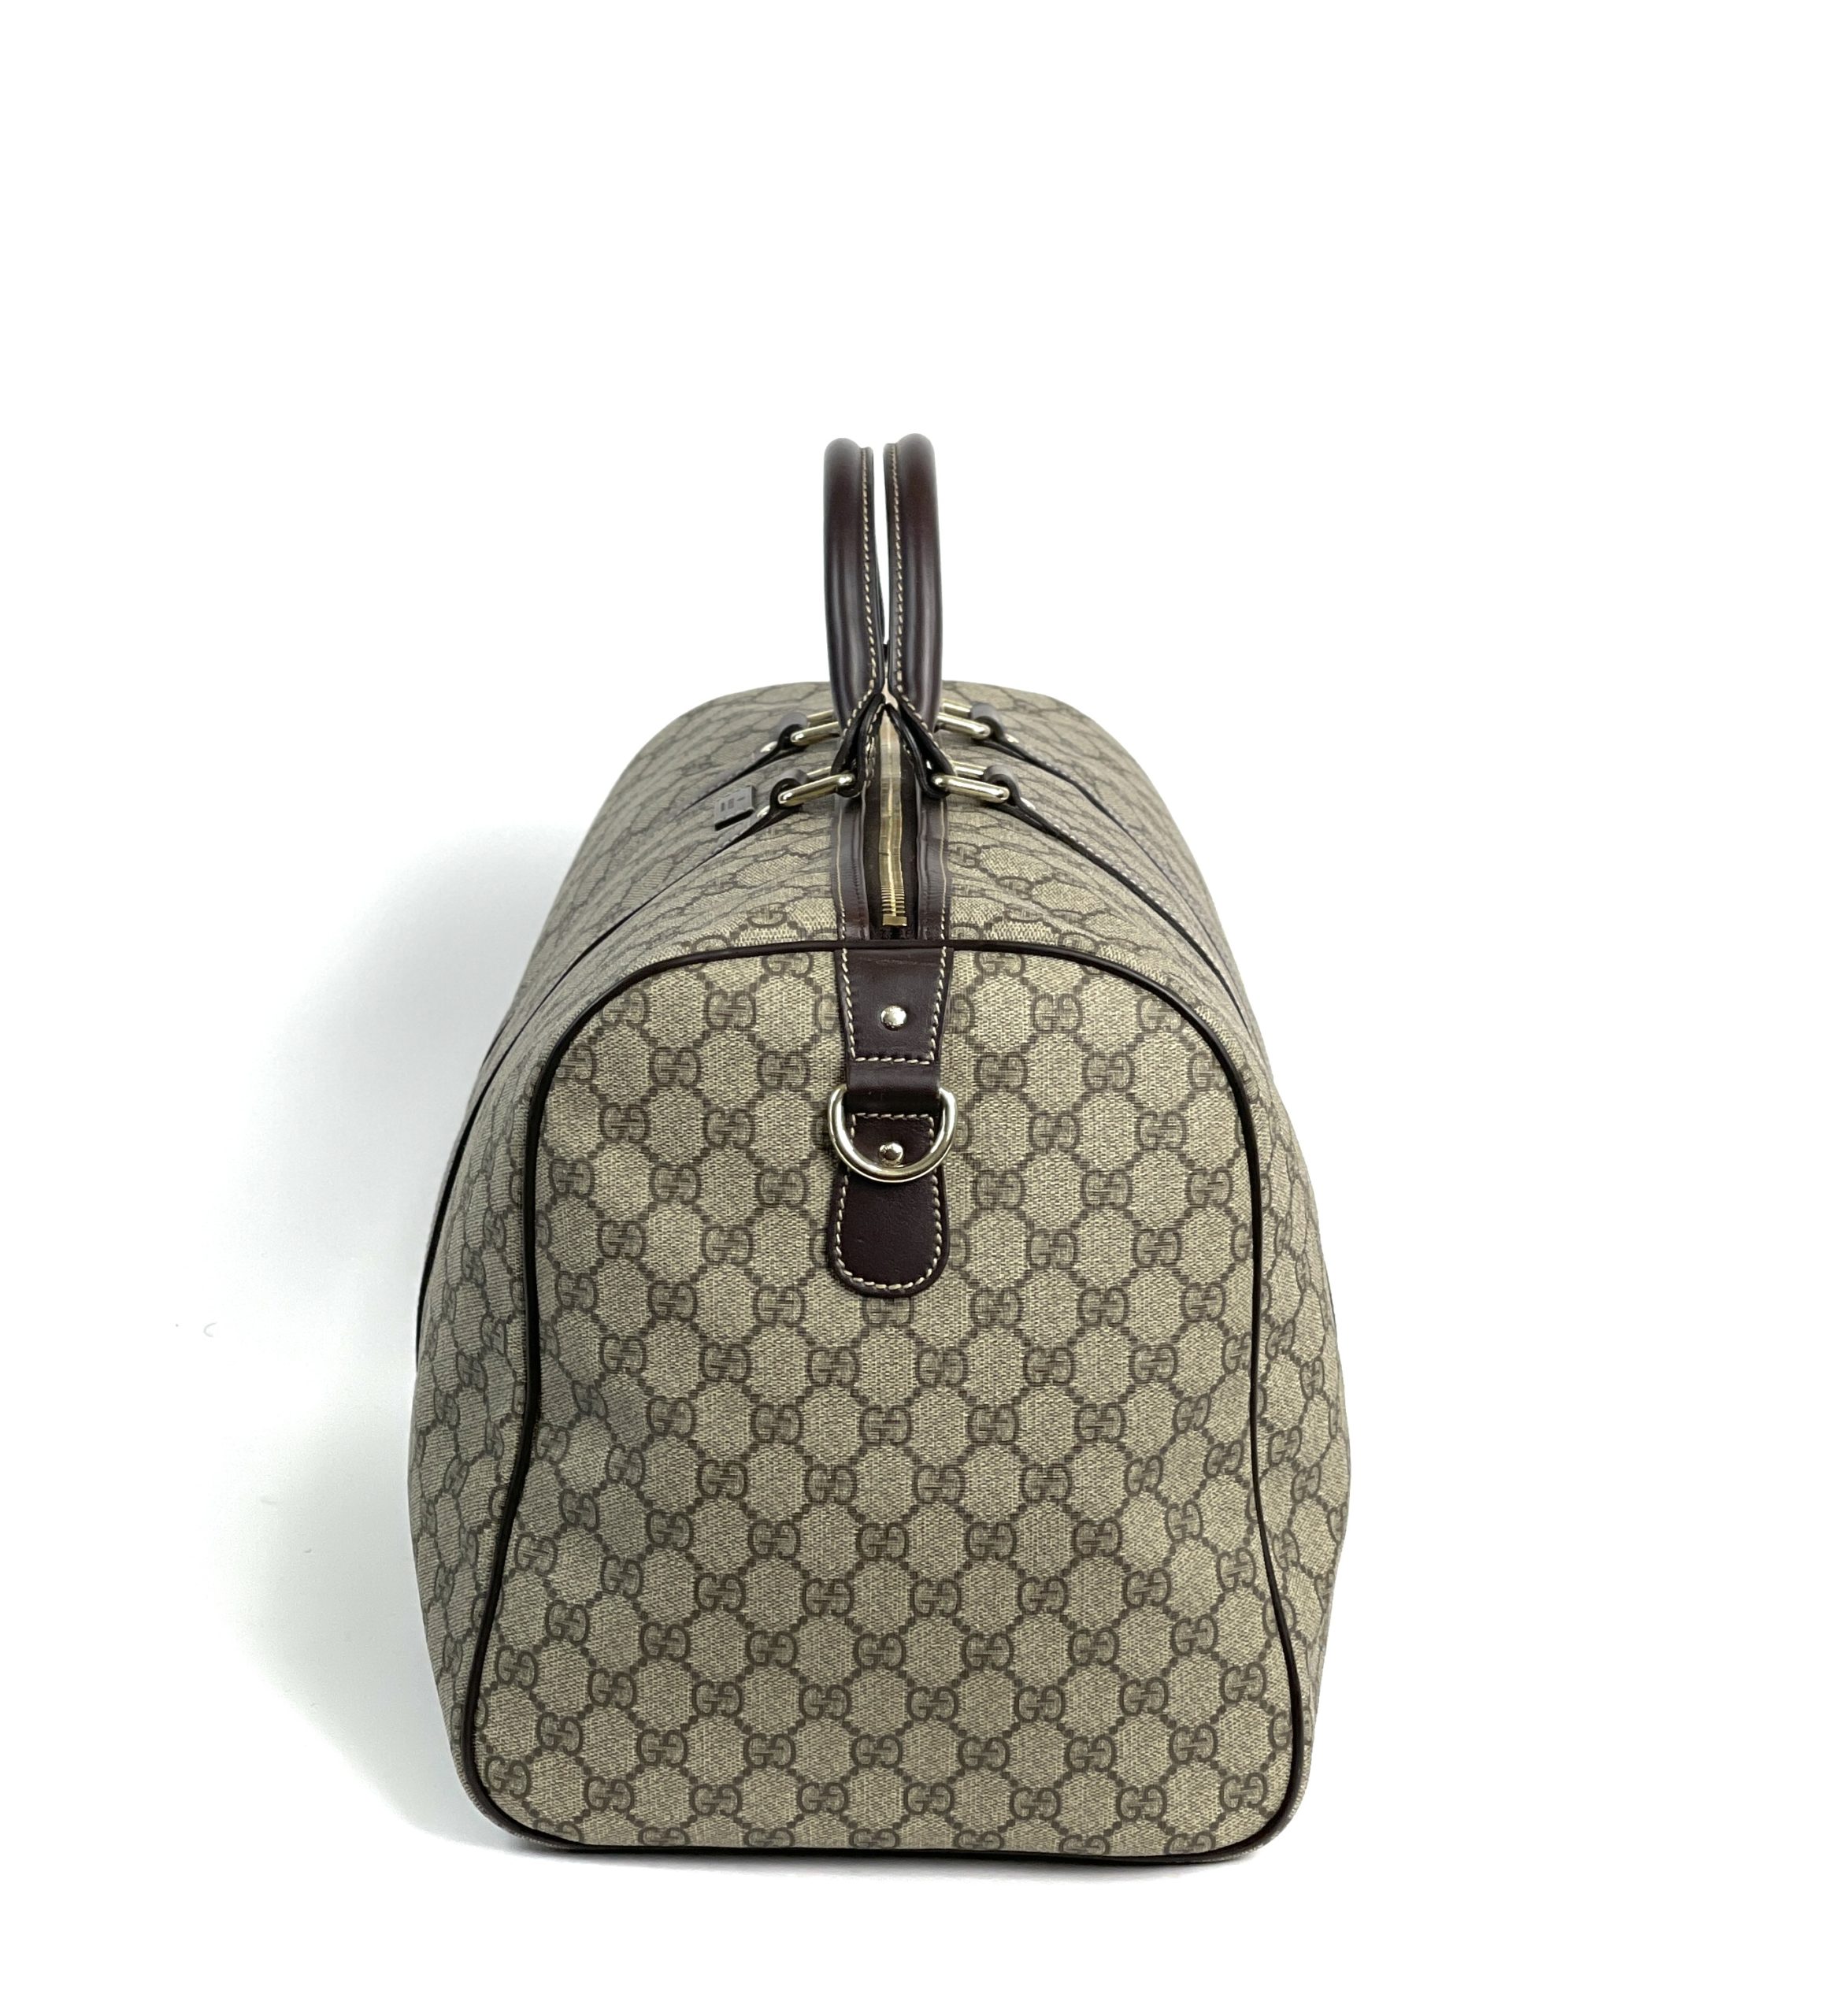 Gucci GG Supreme Web Vintage Suitcase Travel Bag